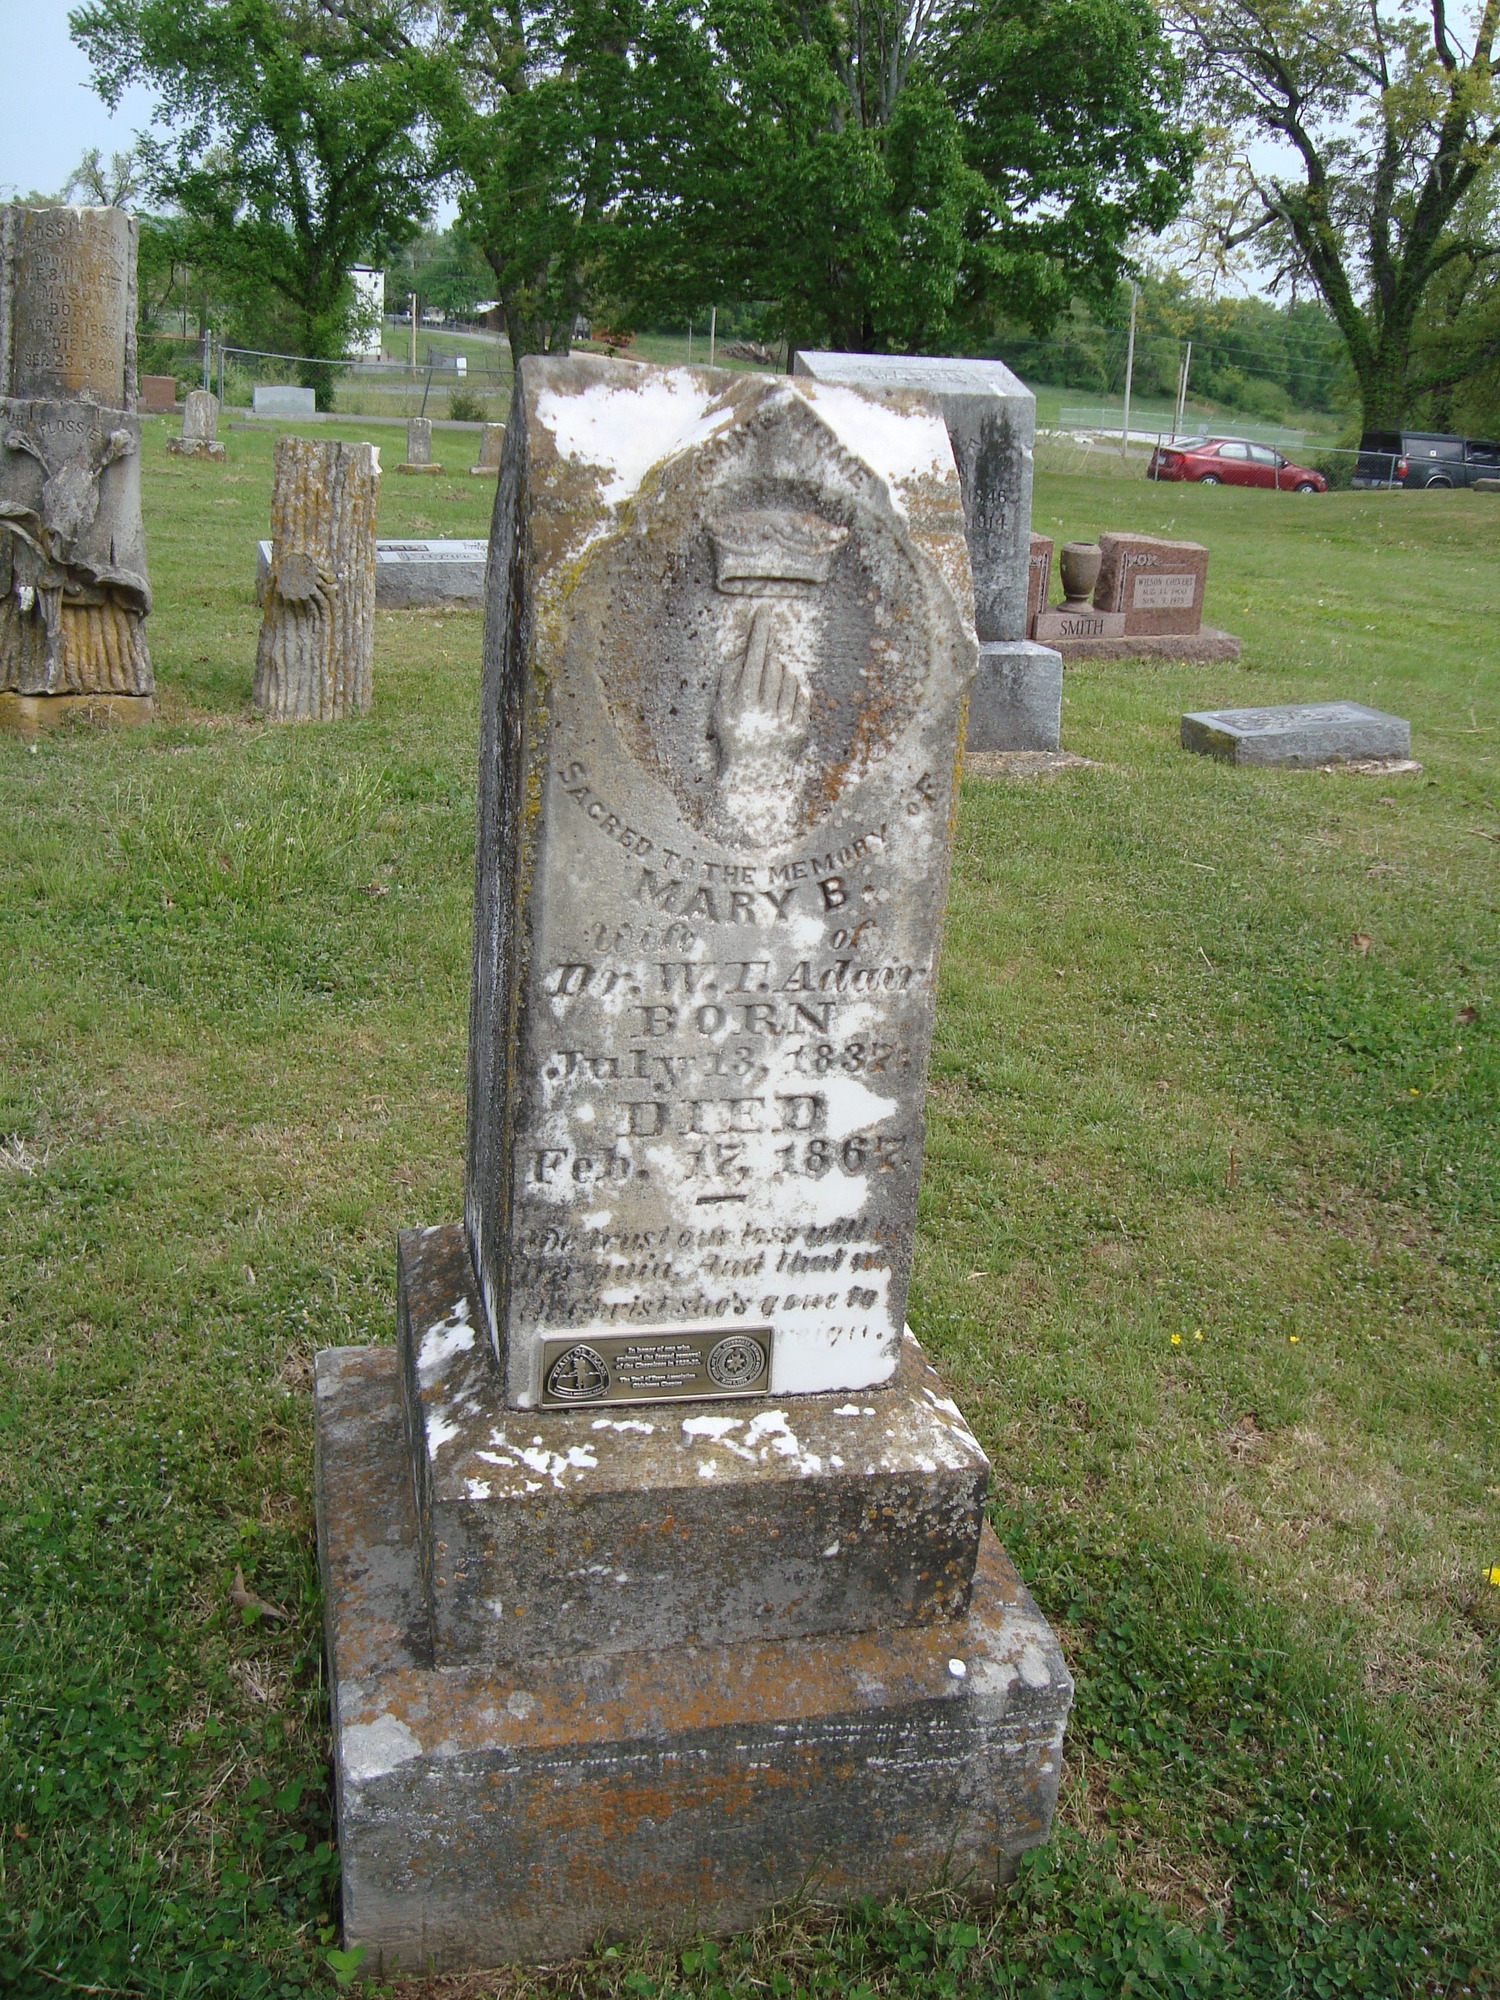 Mary B. Adair gravesite at the Stilwell Cemetery in Stilwell, Oklahoma